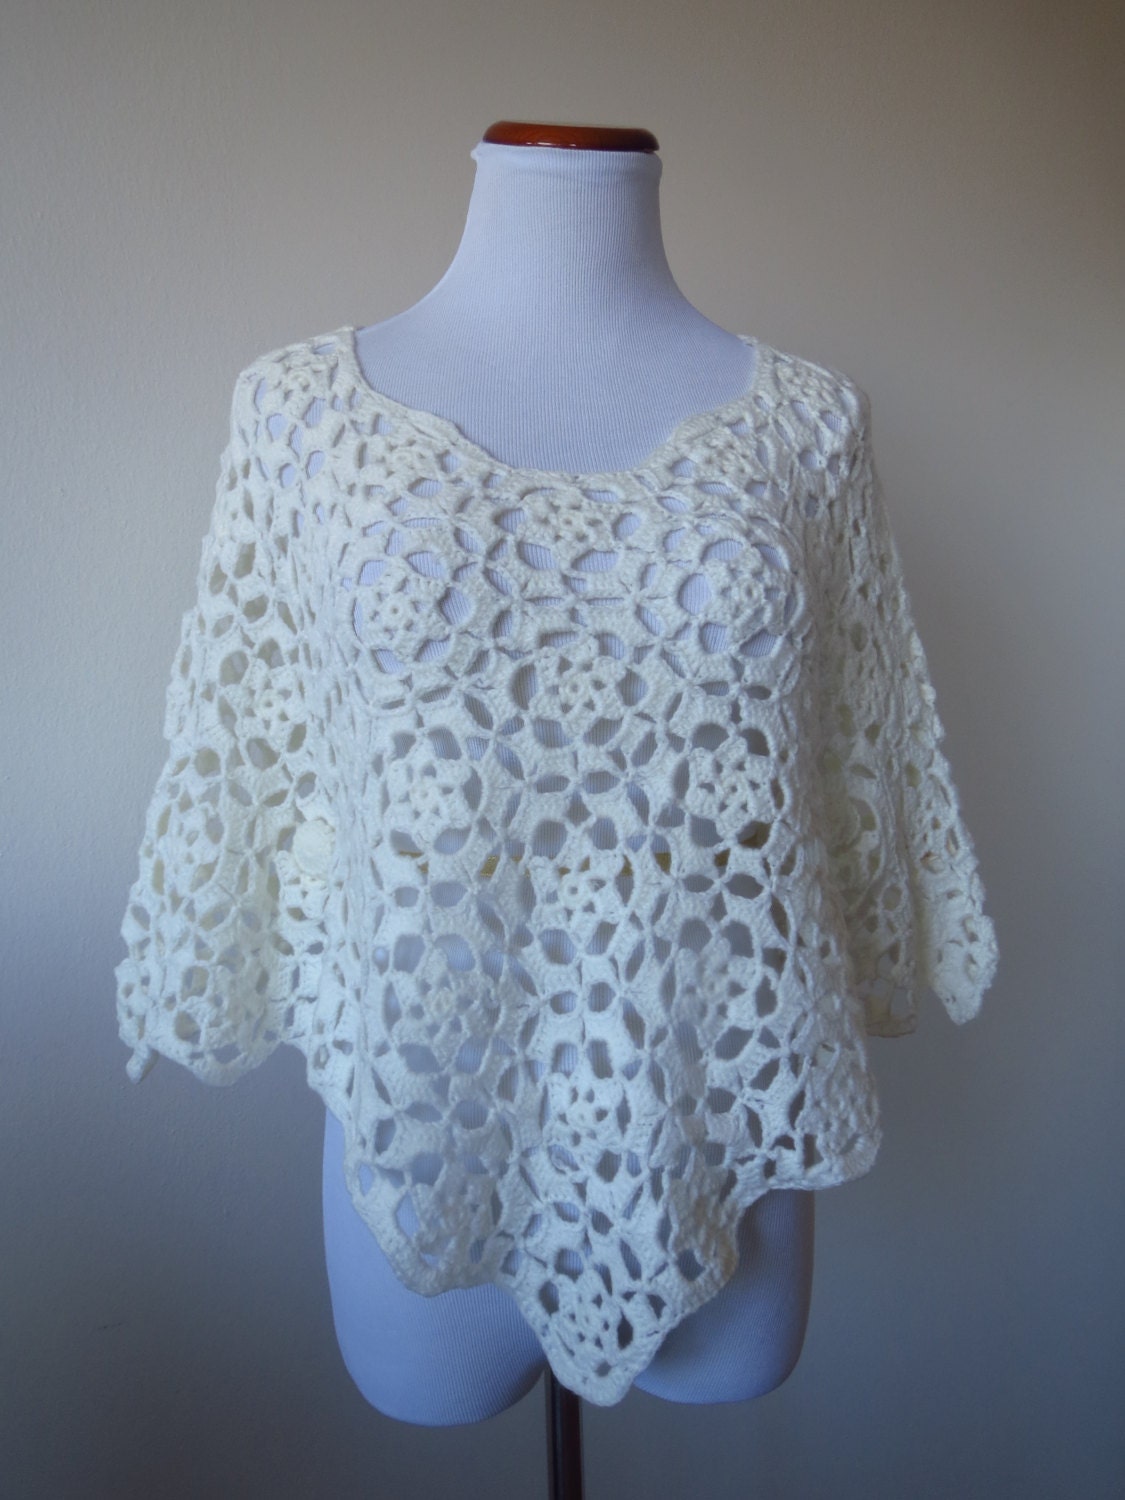 Handmade Crochet Lace Shawl Poncho Cape Blouse Free Size White | Etsy